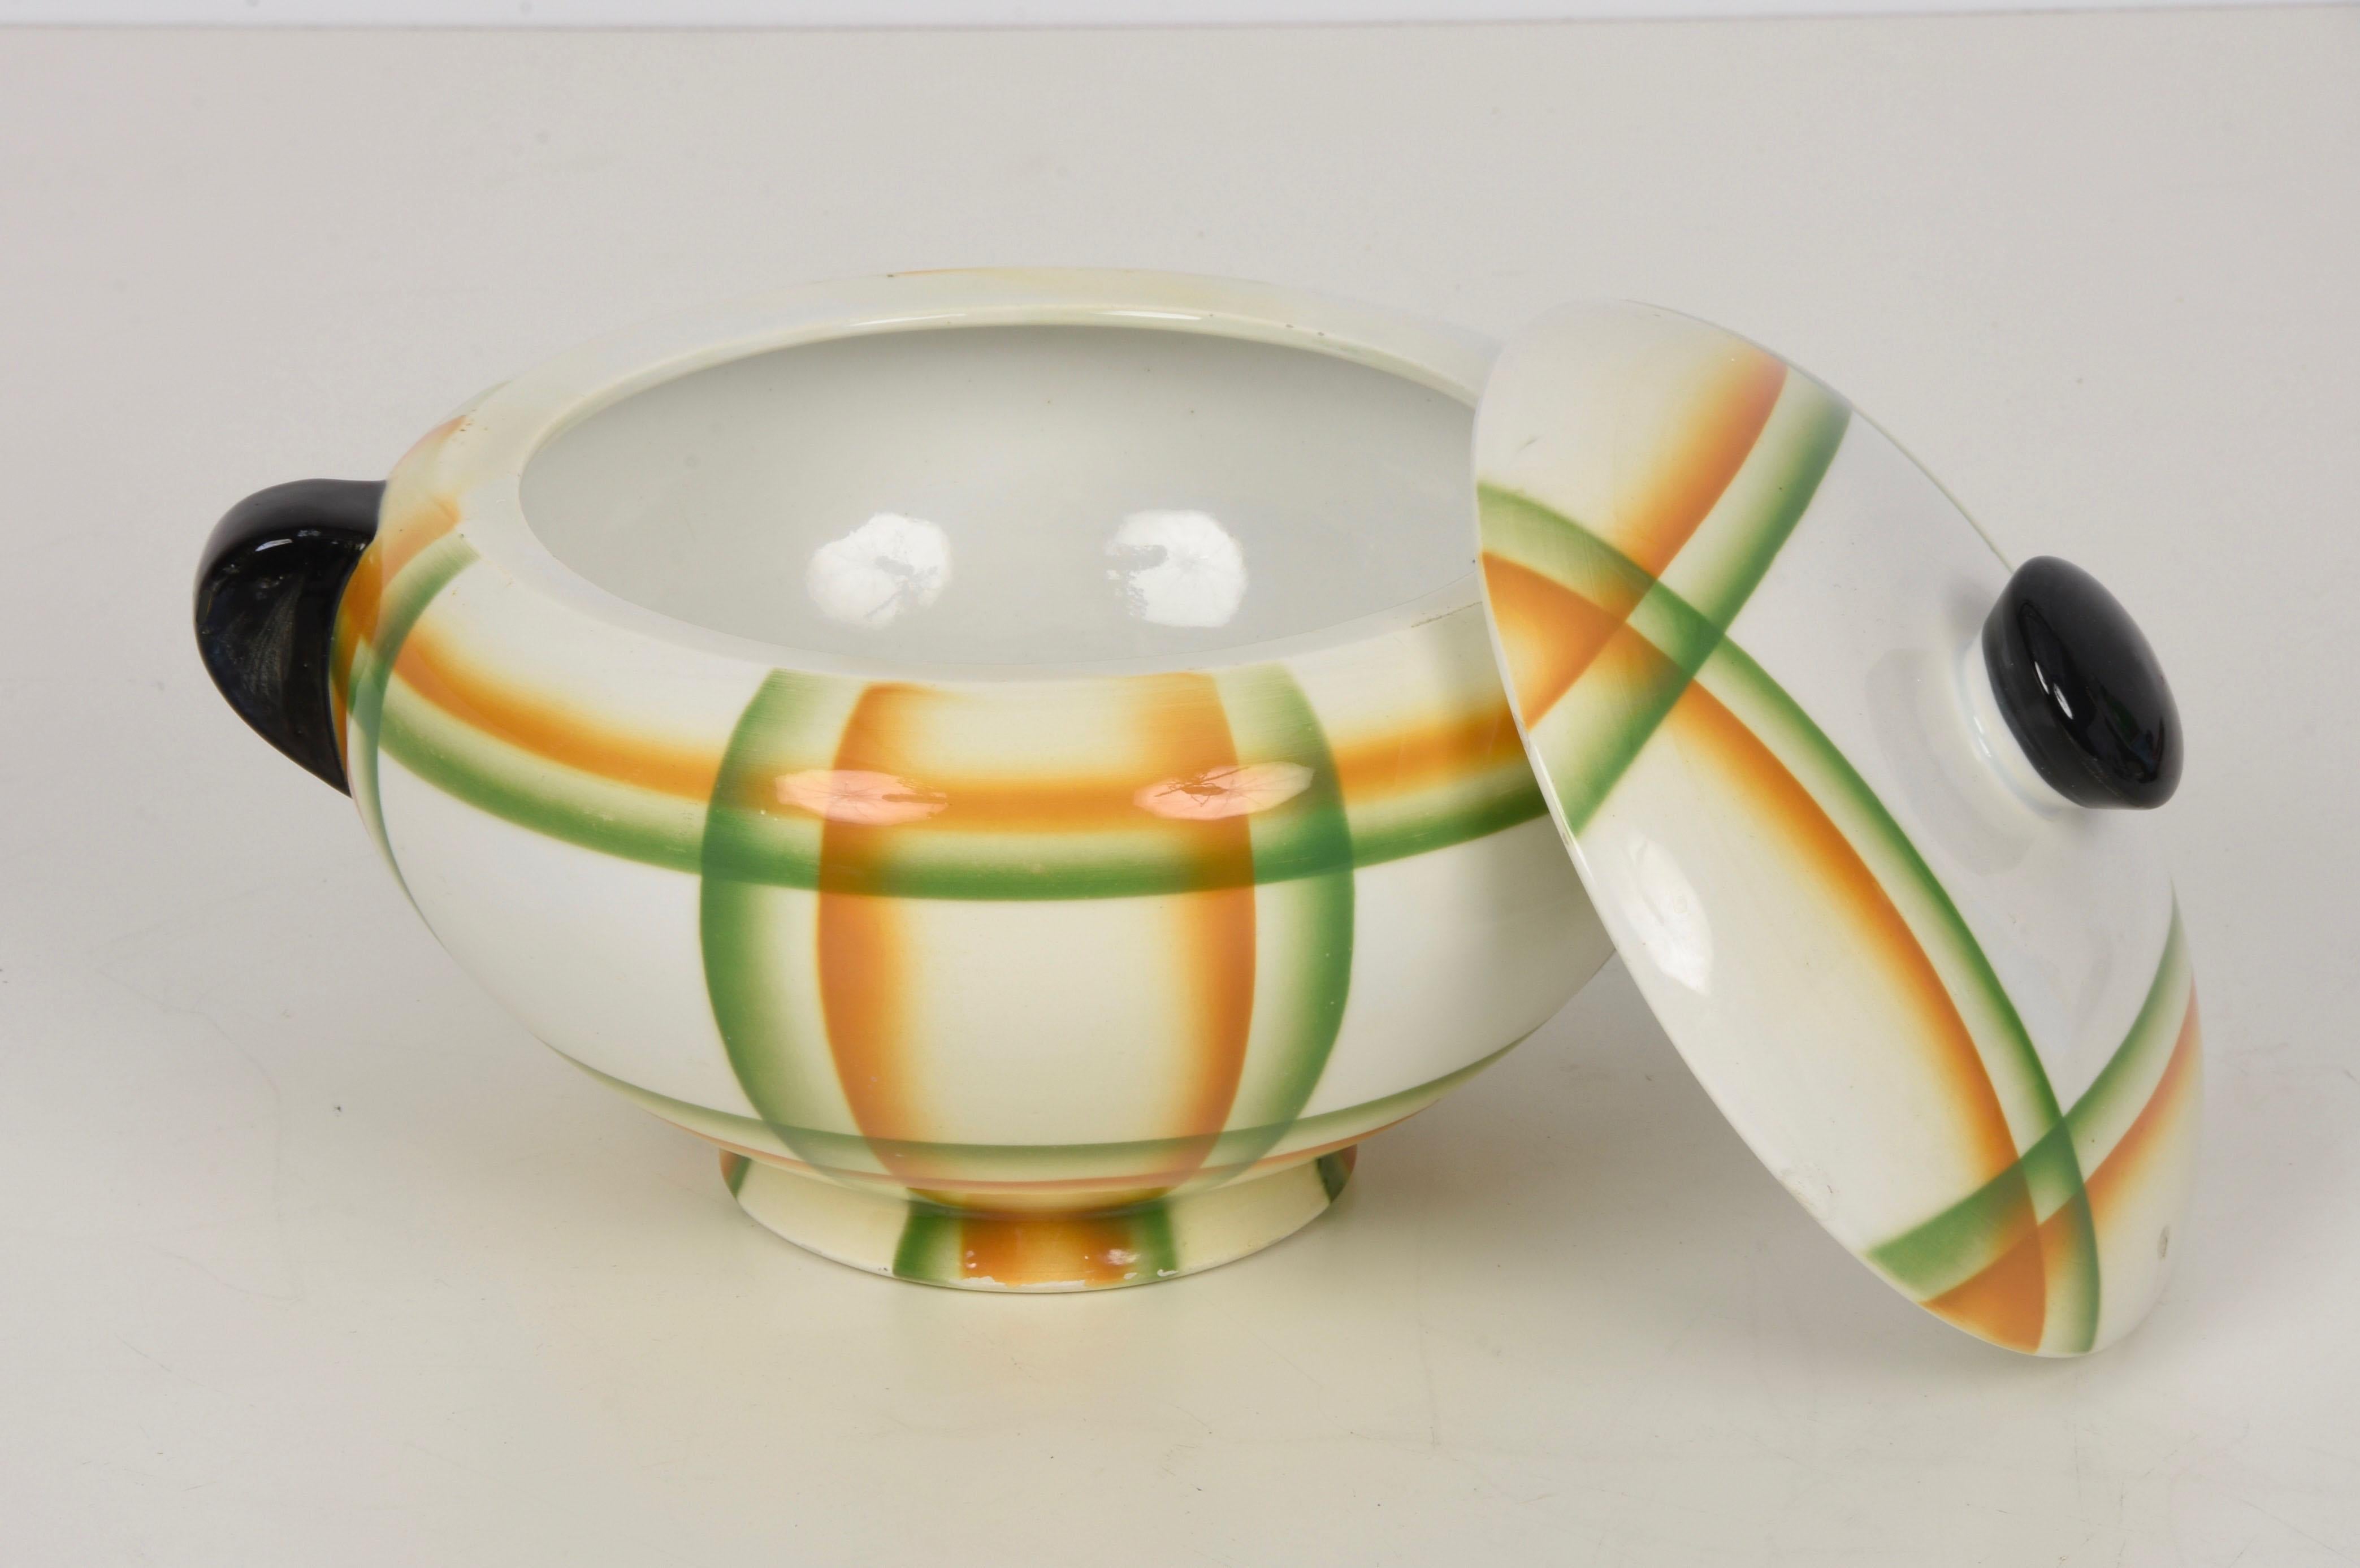 Simonetto Futuristic Airbrushed Ceramic Italian Centerpiece Soup Bowl, 1930s For Sale 6